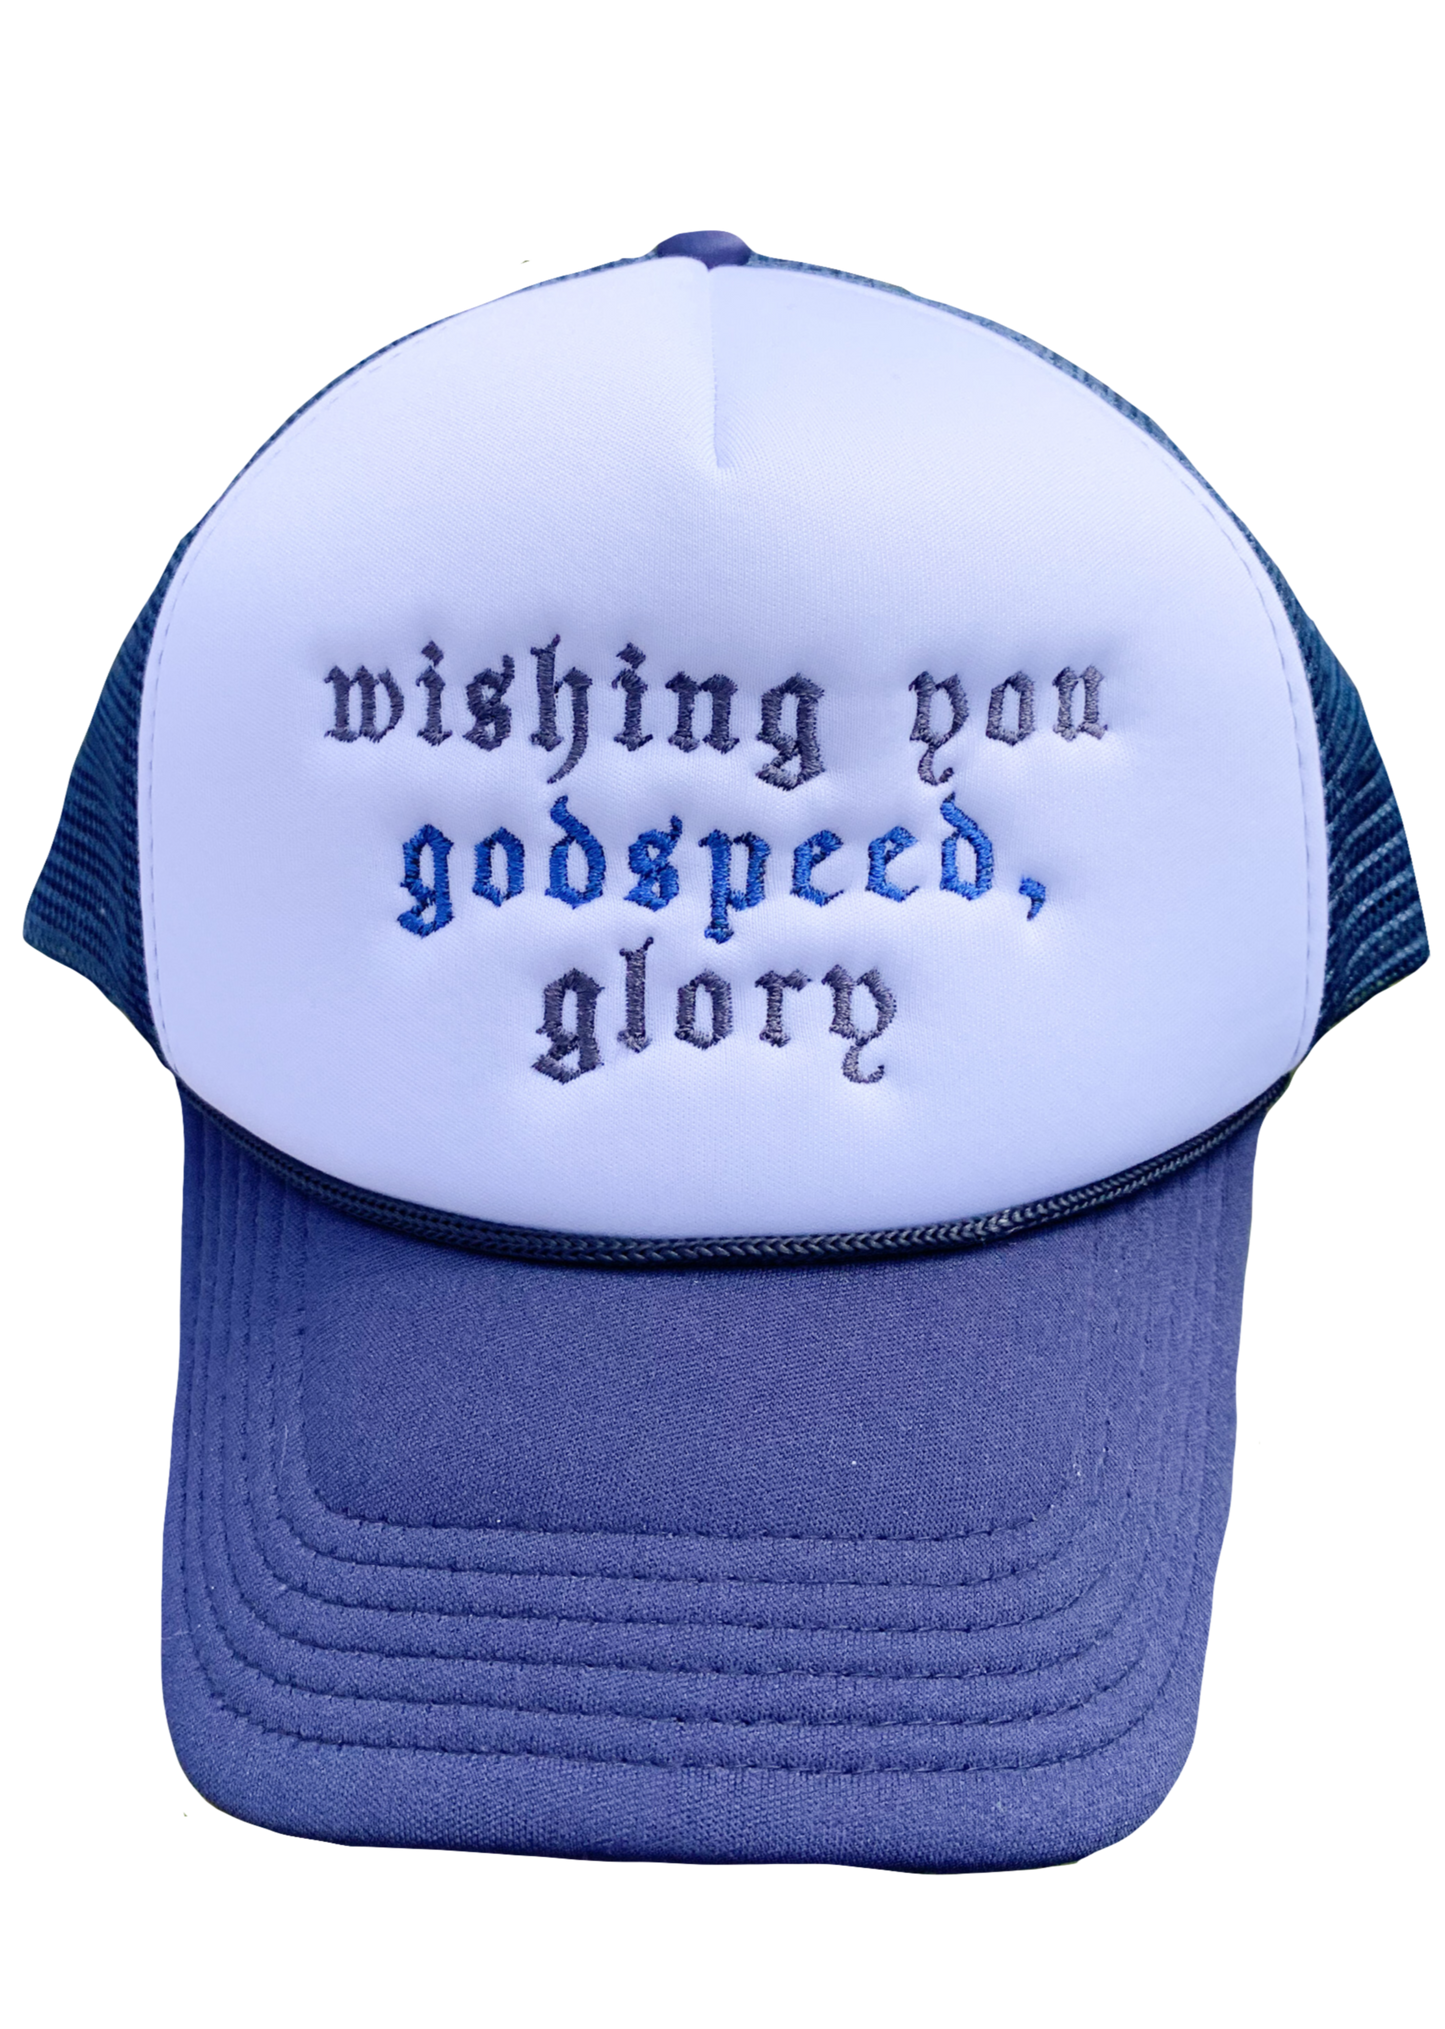 Wishing You Godspeed, Glory Embroidered Foam Trucker Hat